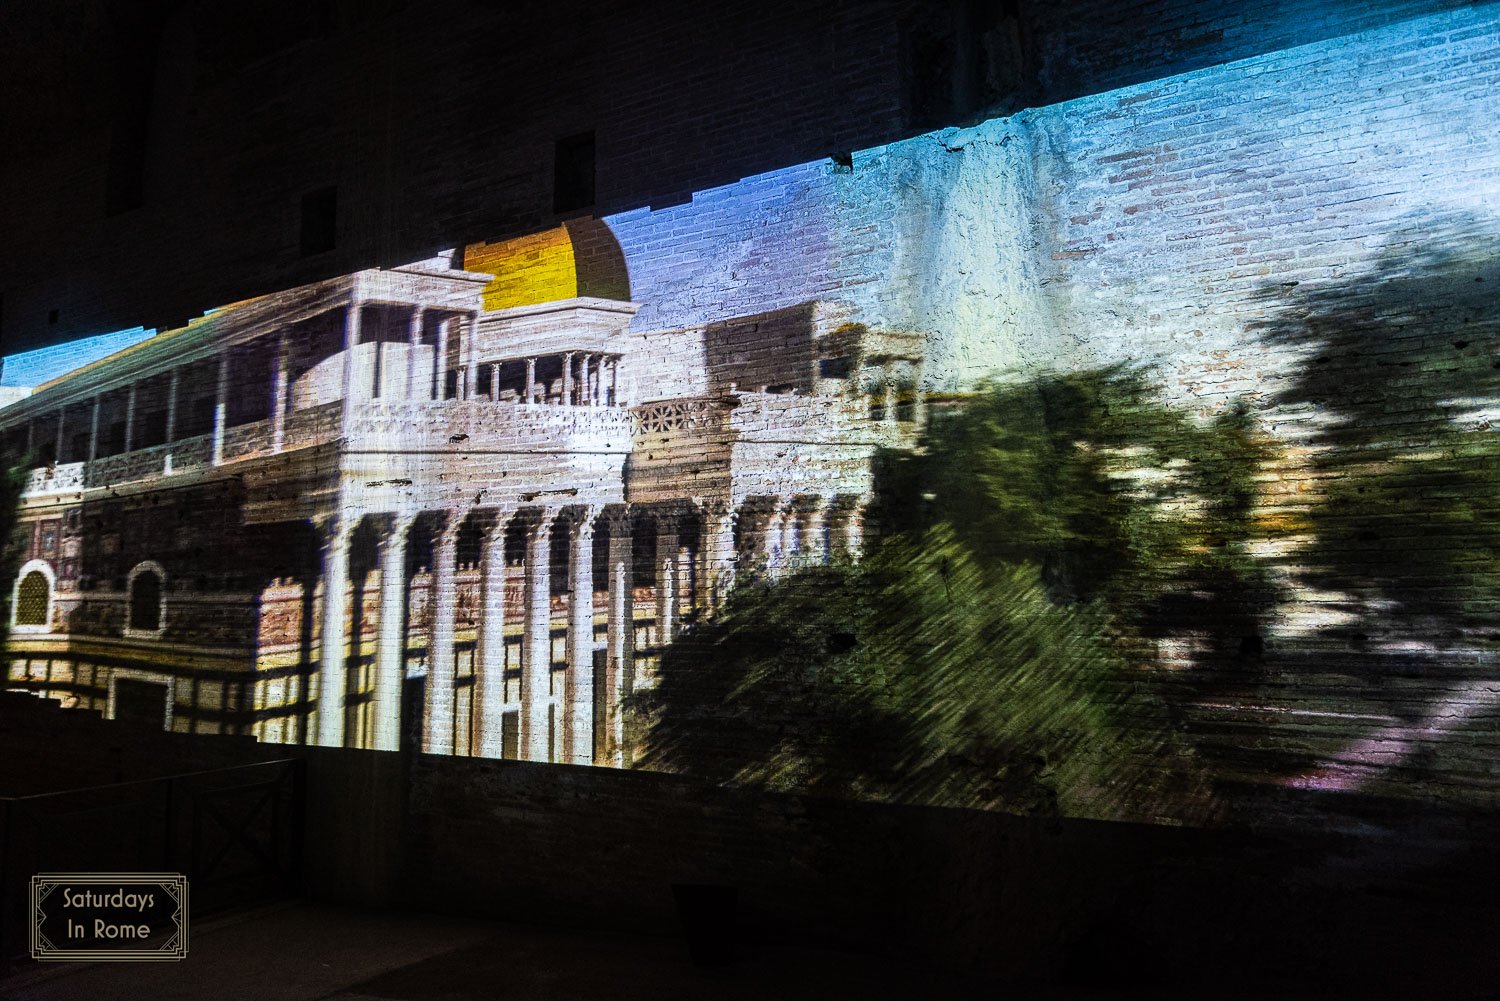 Nero’s Golden Palace - Multi-Media Presentations Bring It To Life!